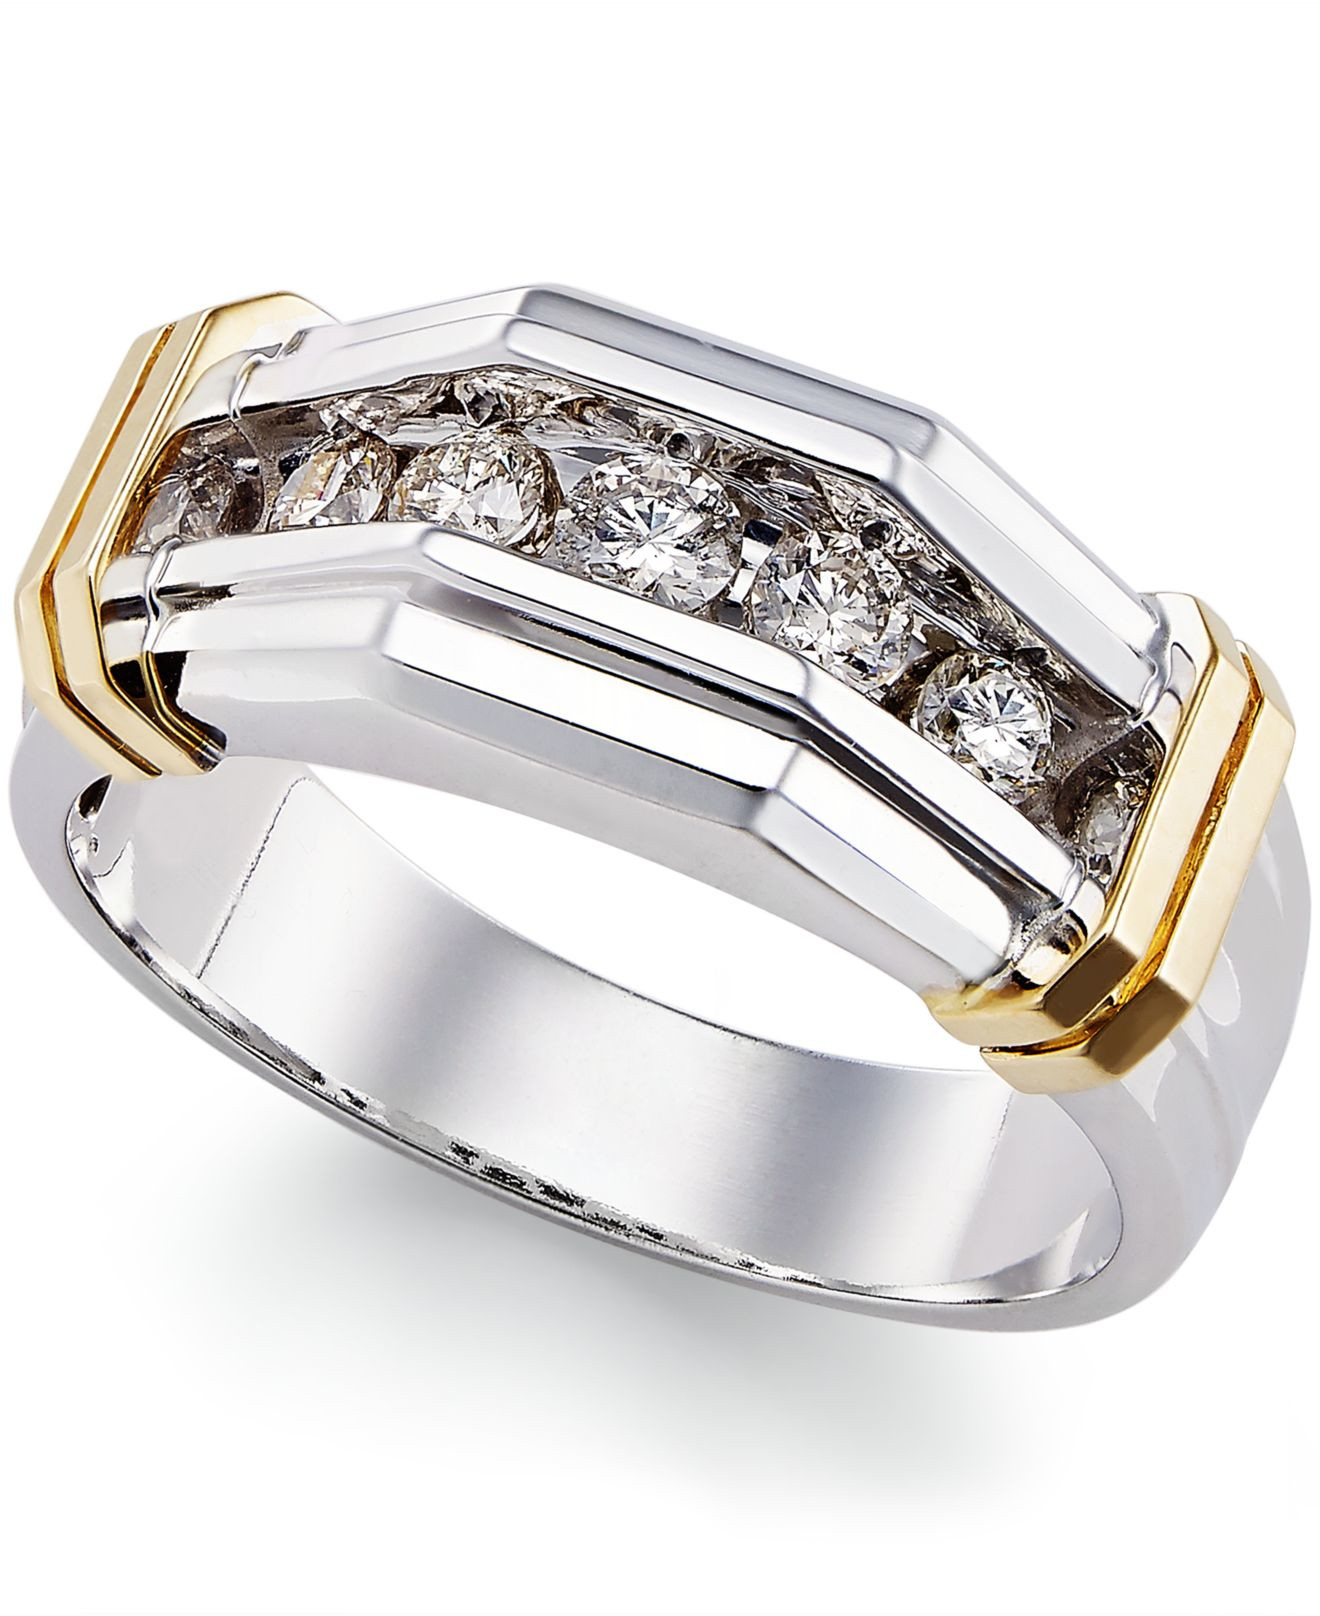 Men Diamond Rings
 Macy s Men s Diamond 1 2 Ct T w Ring In 10k White Gold